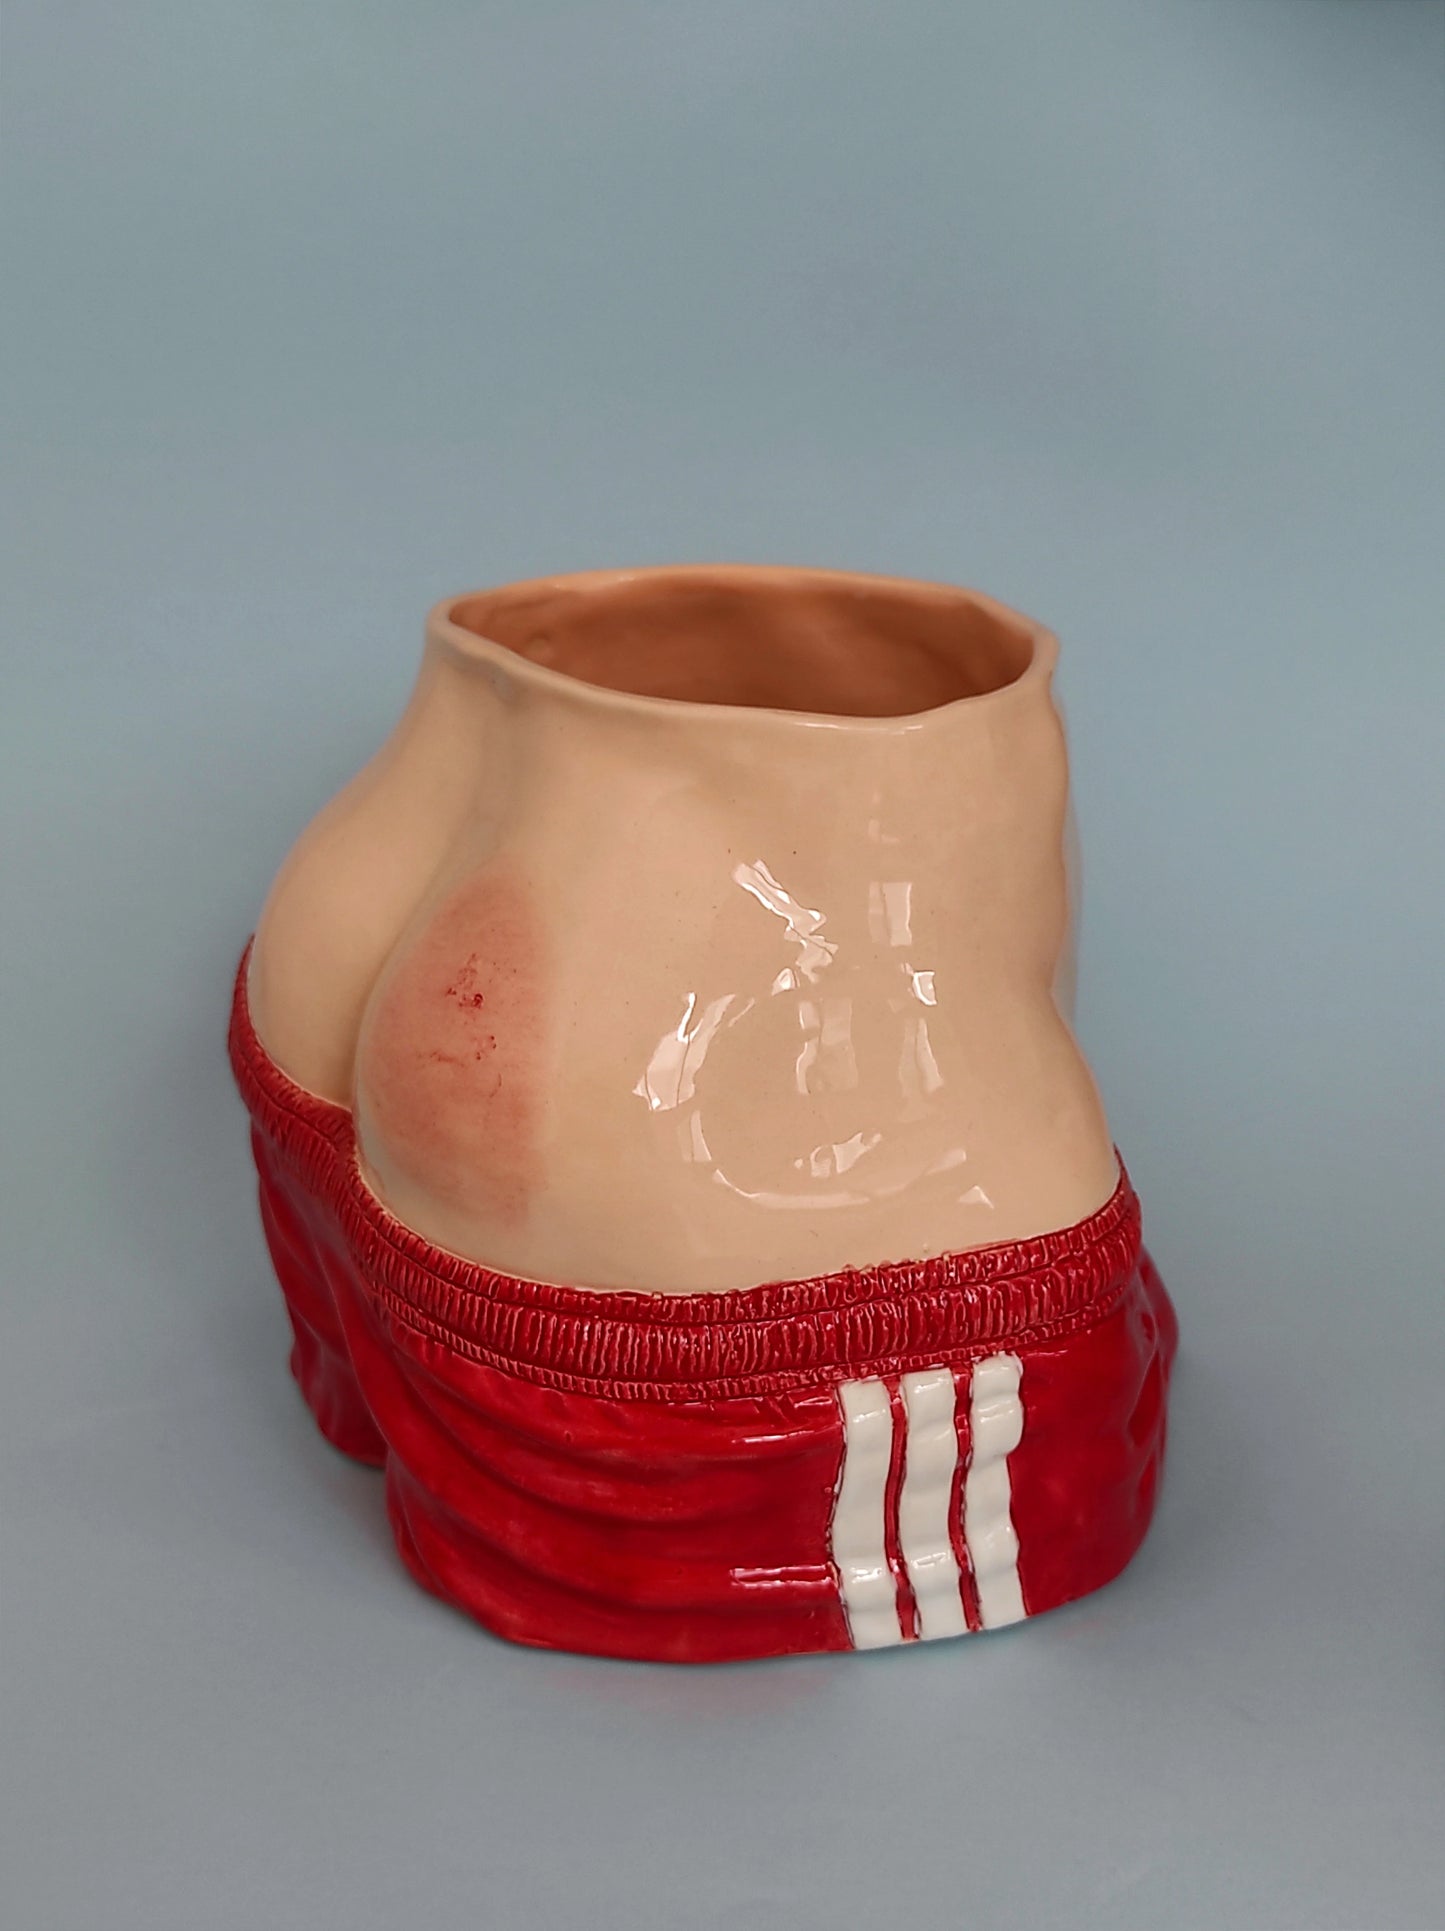 "Sportboy" Pot by Art Bazar - Red